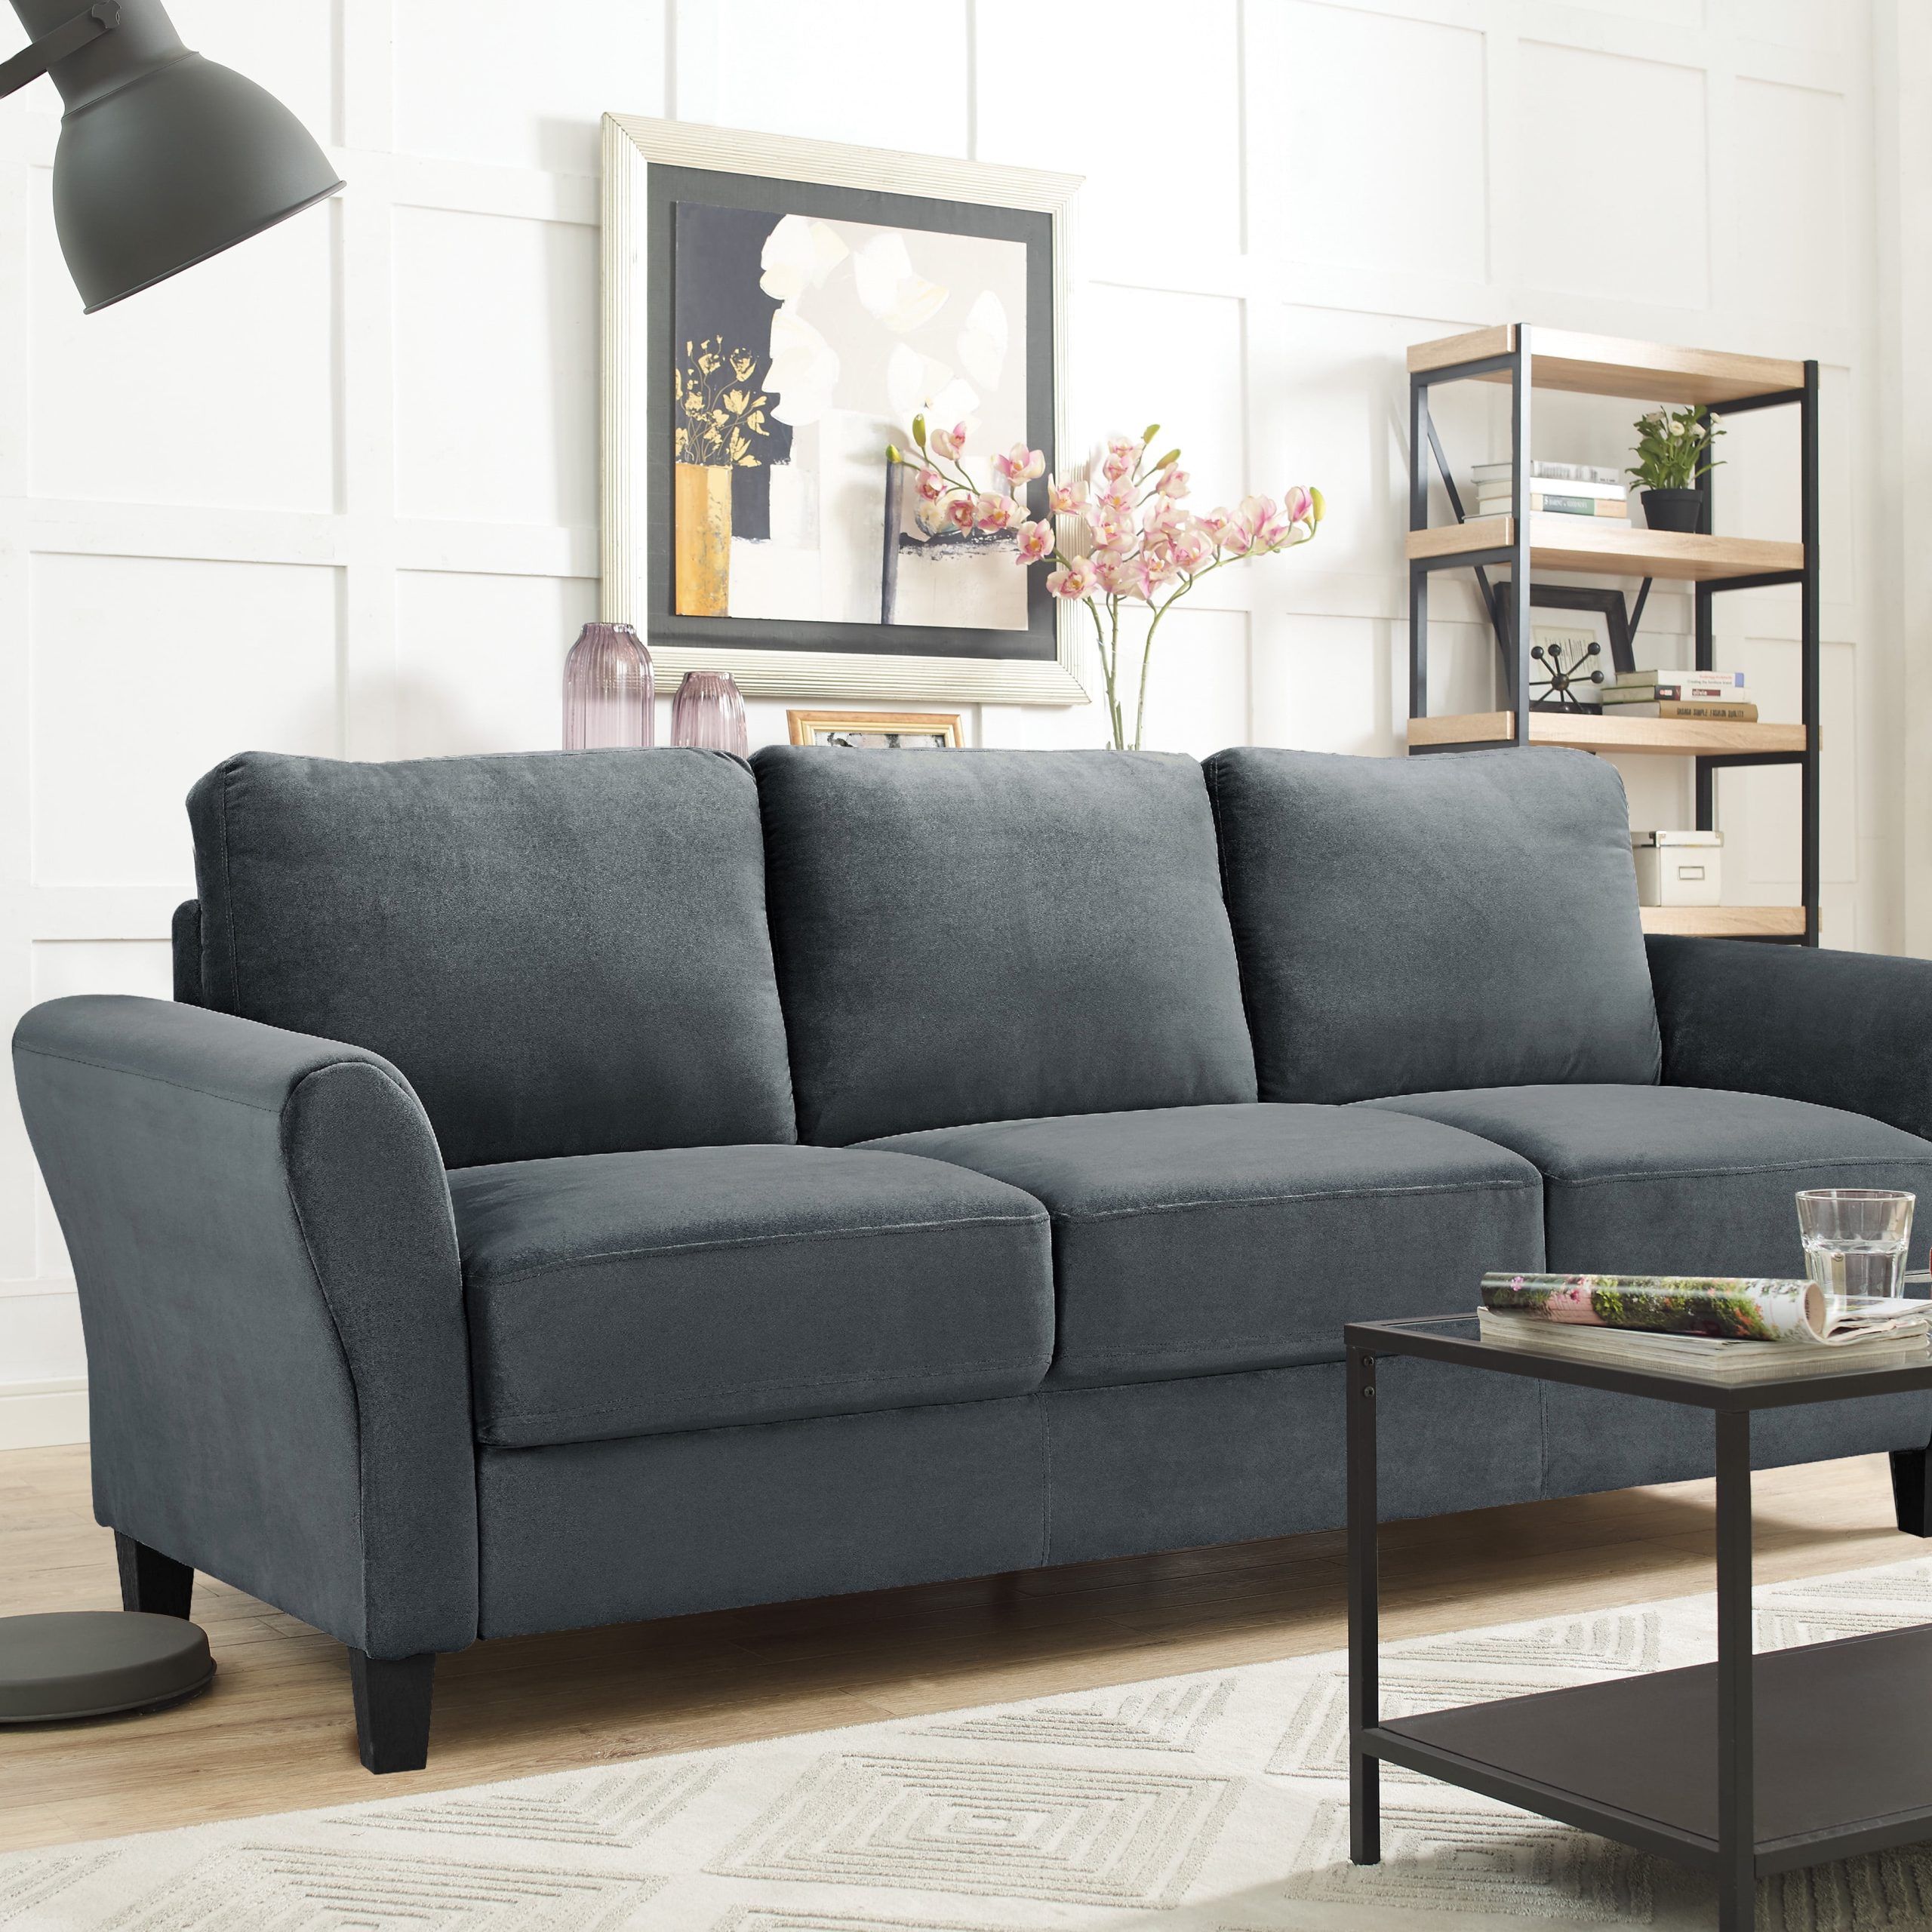 Lifestyle Solutions Alexa 3 Seat Rolled Arm Microfiber Sofa, Dark Grey Regarding Dark Grey Polyester Sofa Couches (View 2 of 20)